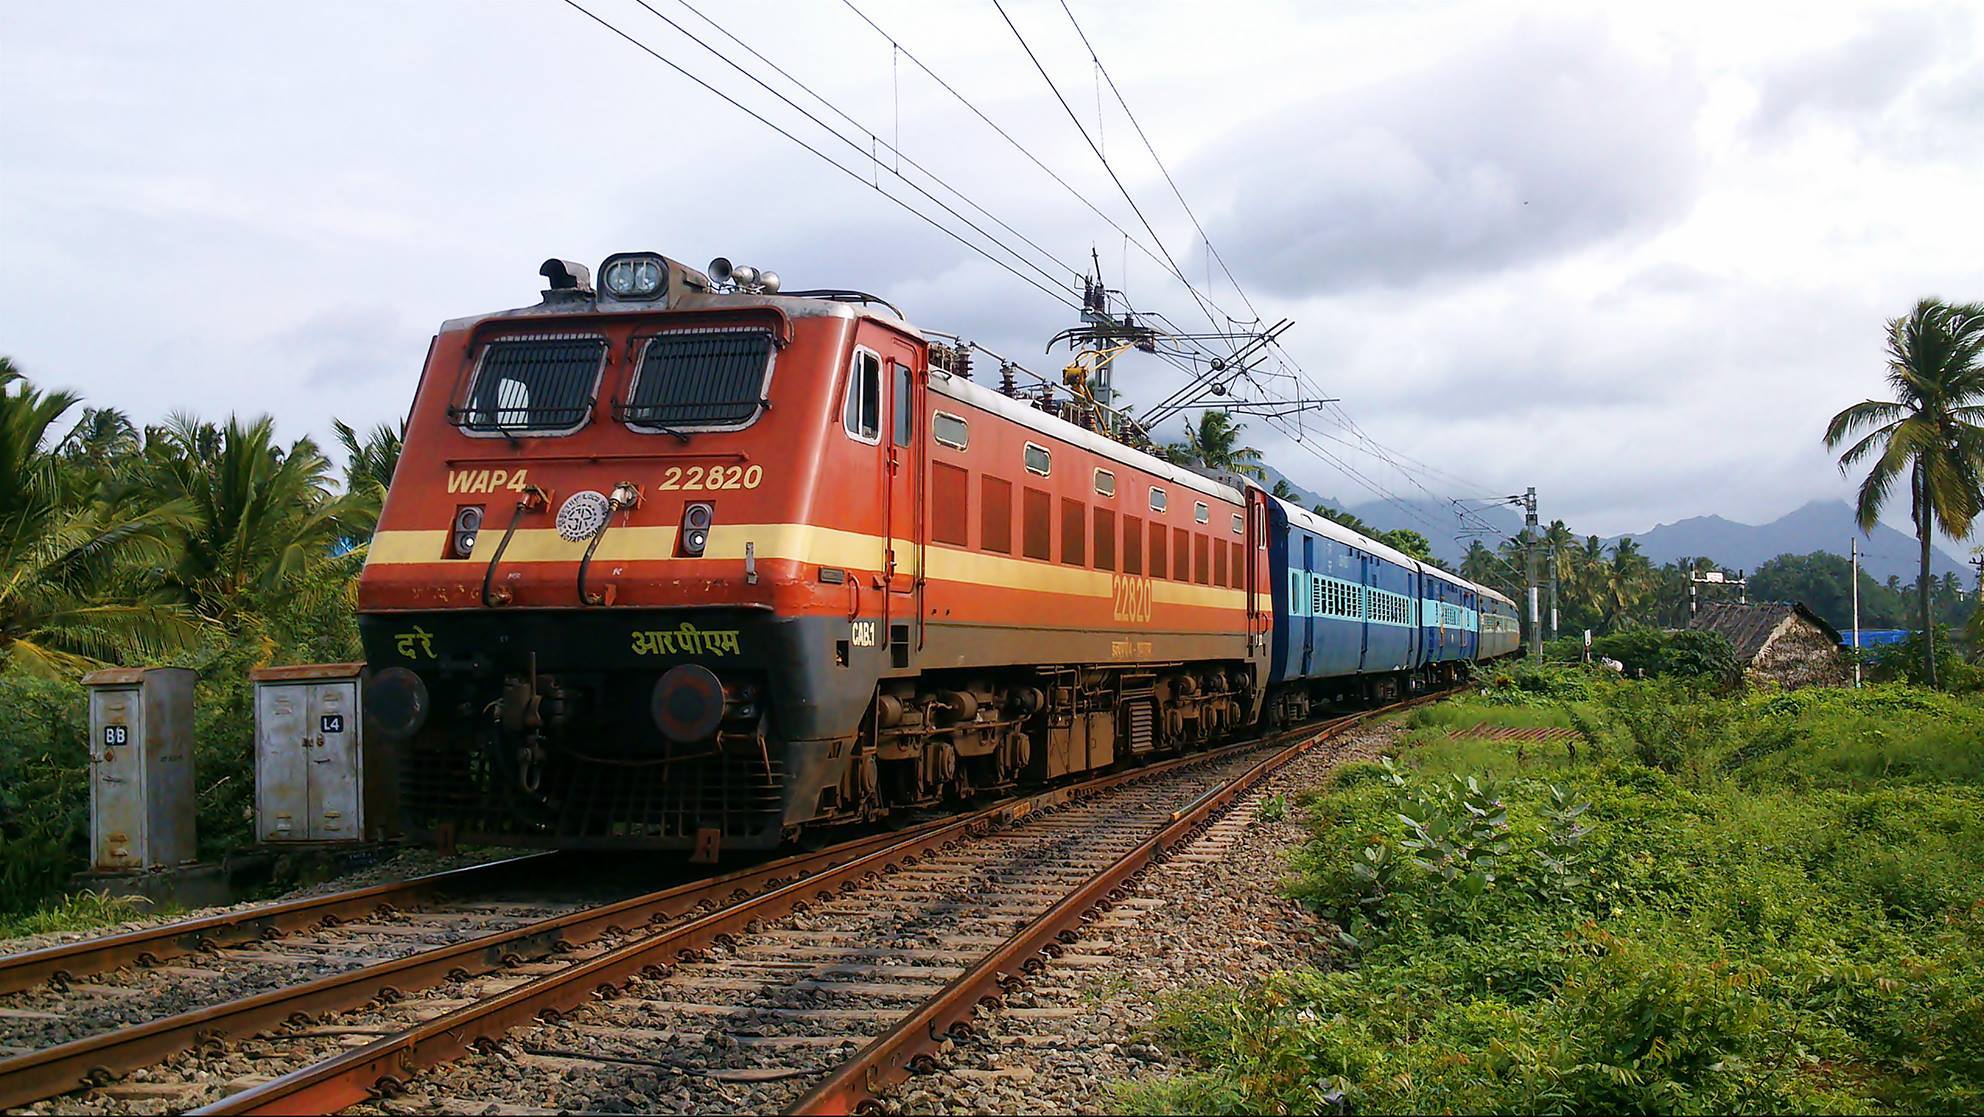 Train was going to Kolhapur in Maharashtra, reached Madhya Pradesh